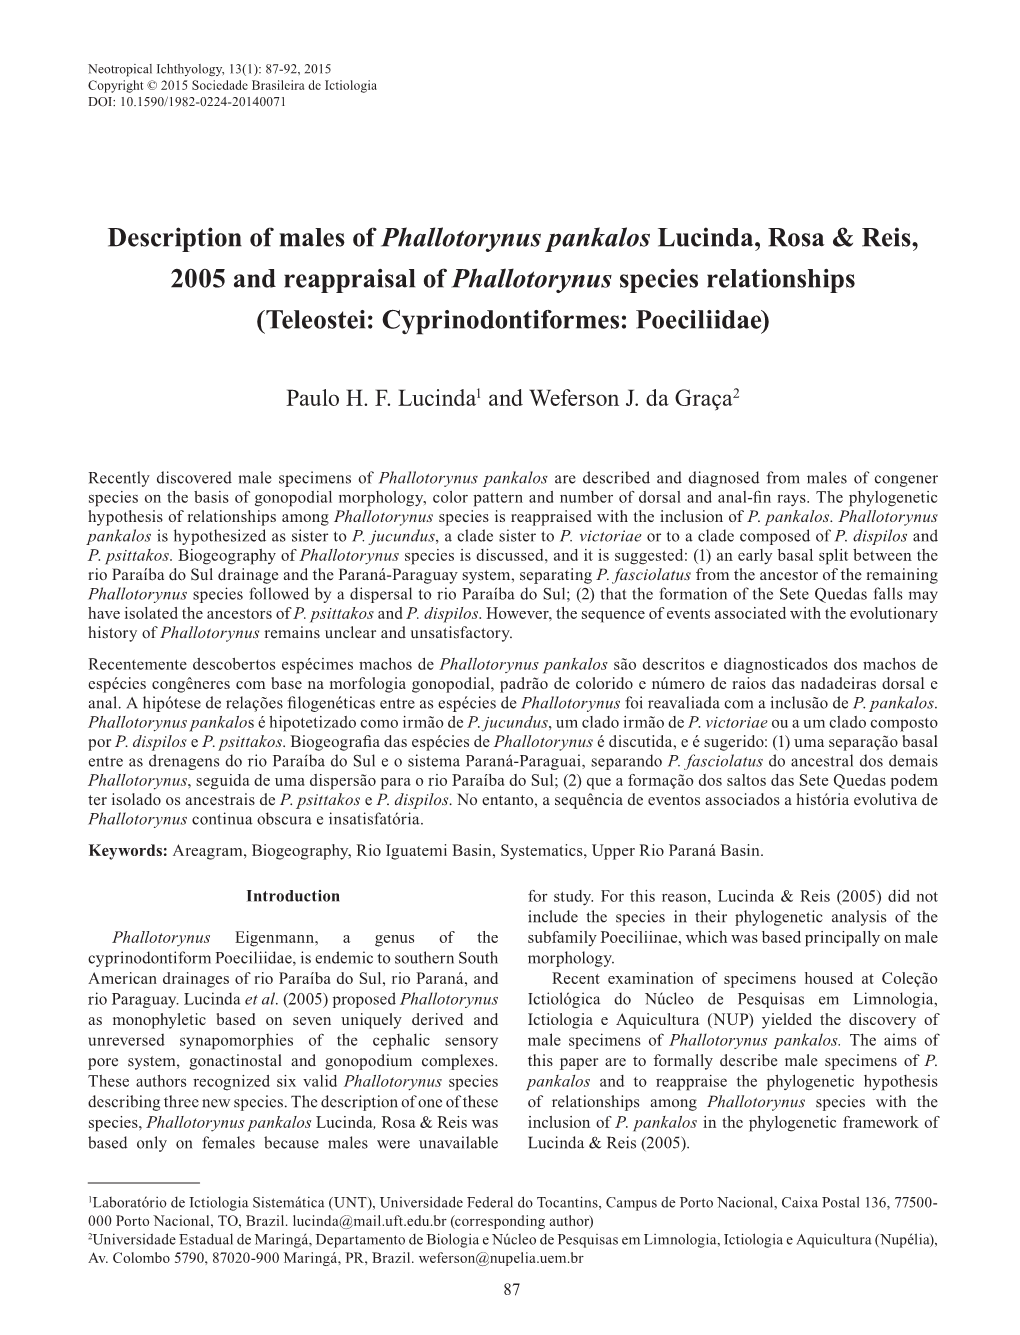 Description of Males of Phallotorynus Pankalos Lucinda, Rosa & Reis